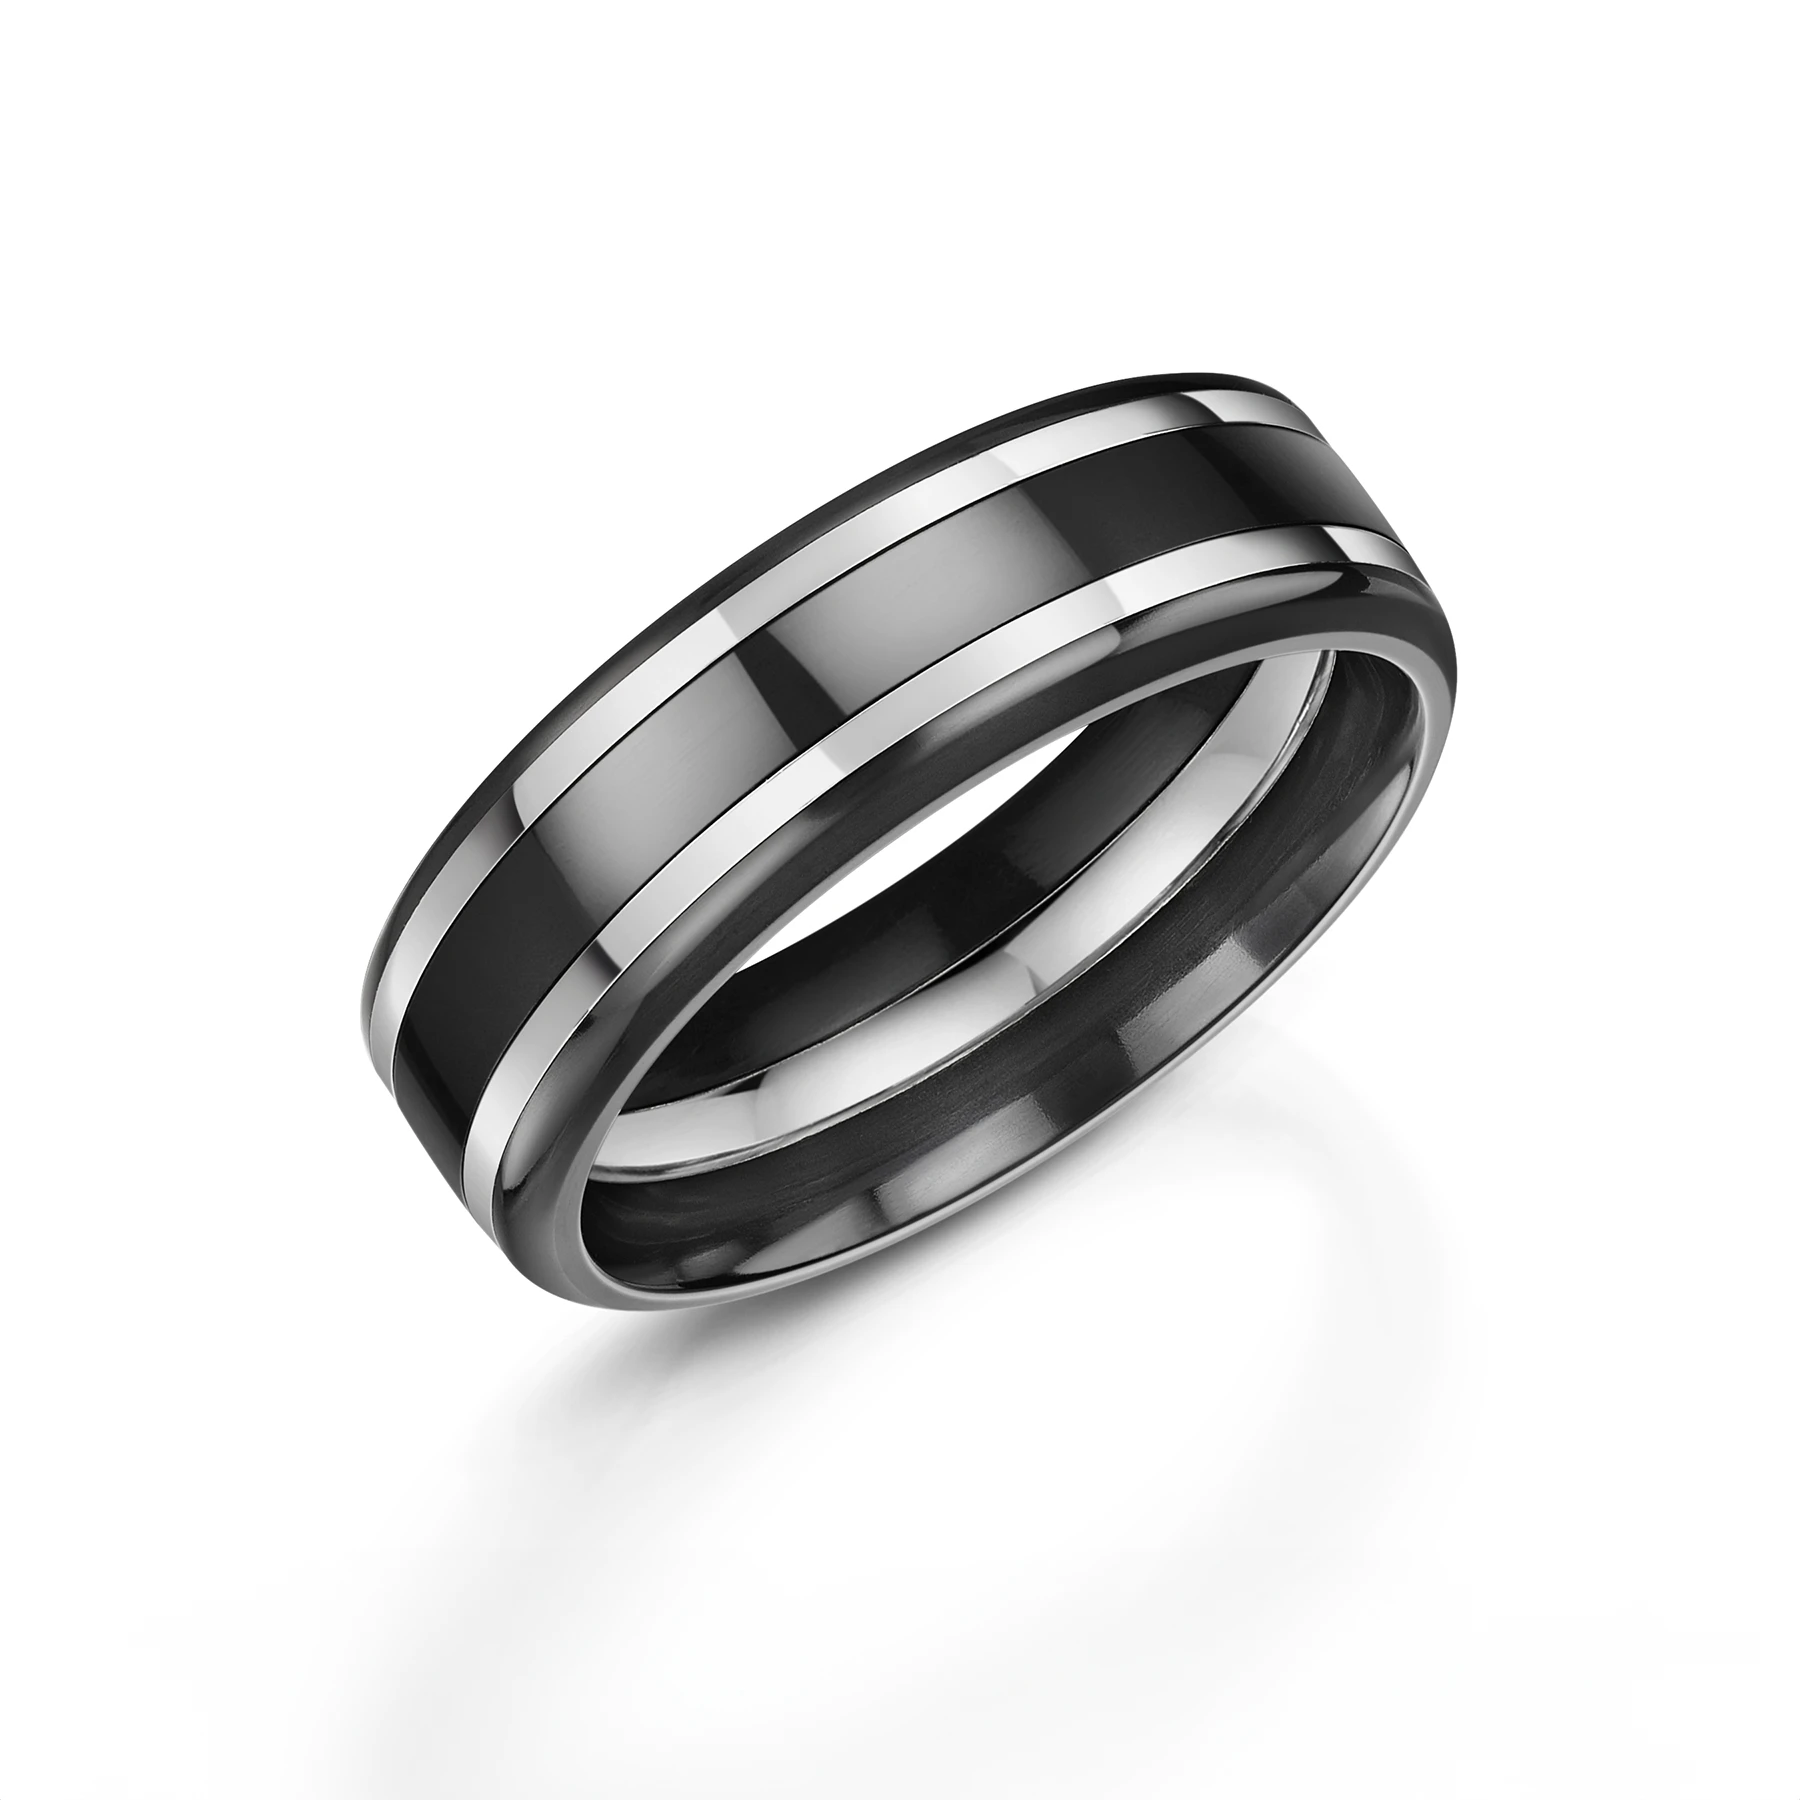 Polished Black Zirconium Wedding Ring with Platinum Inlays